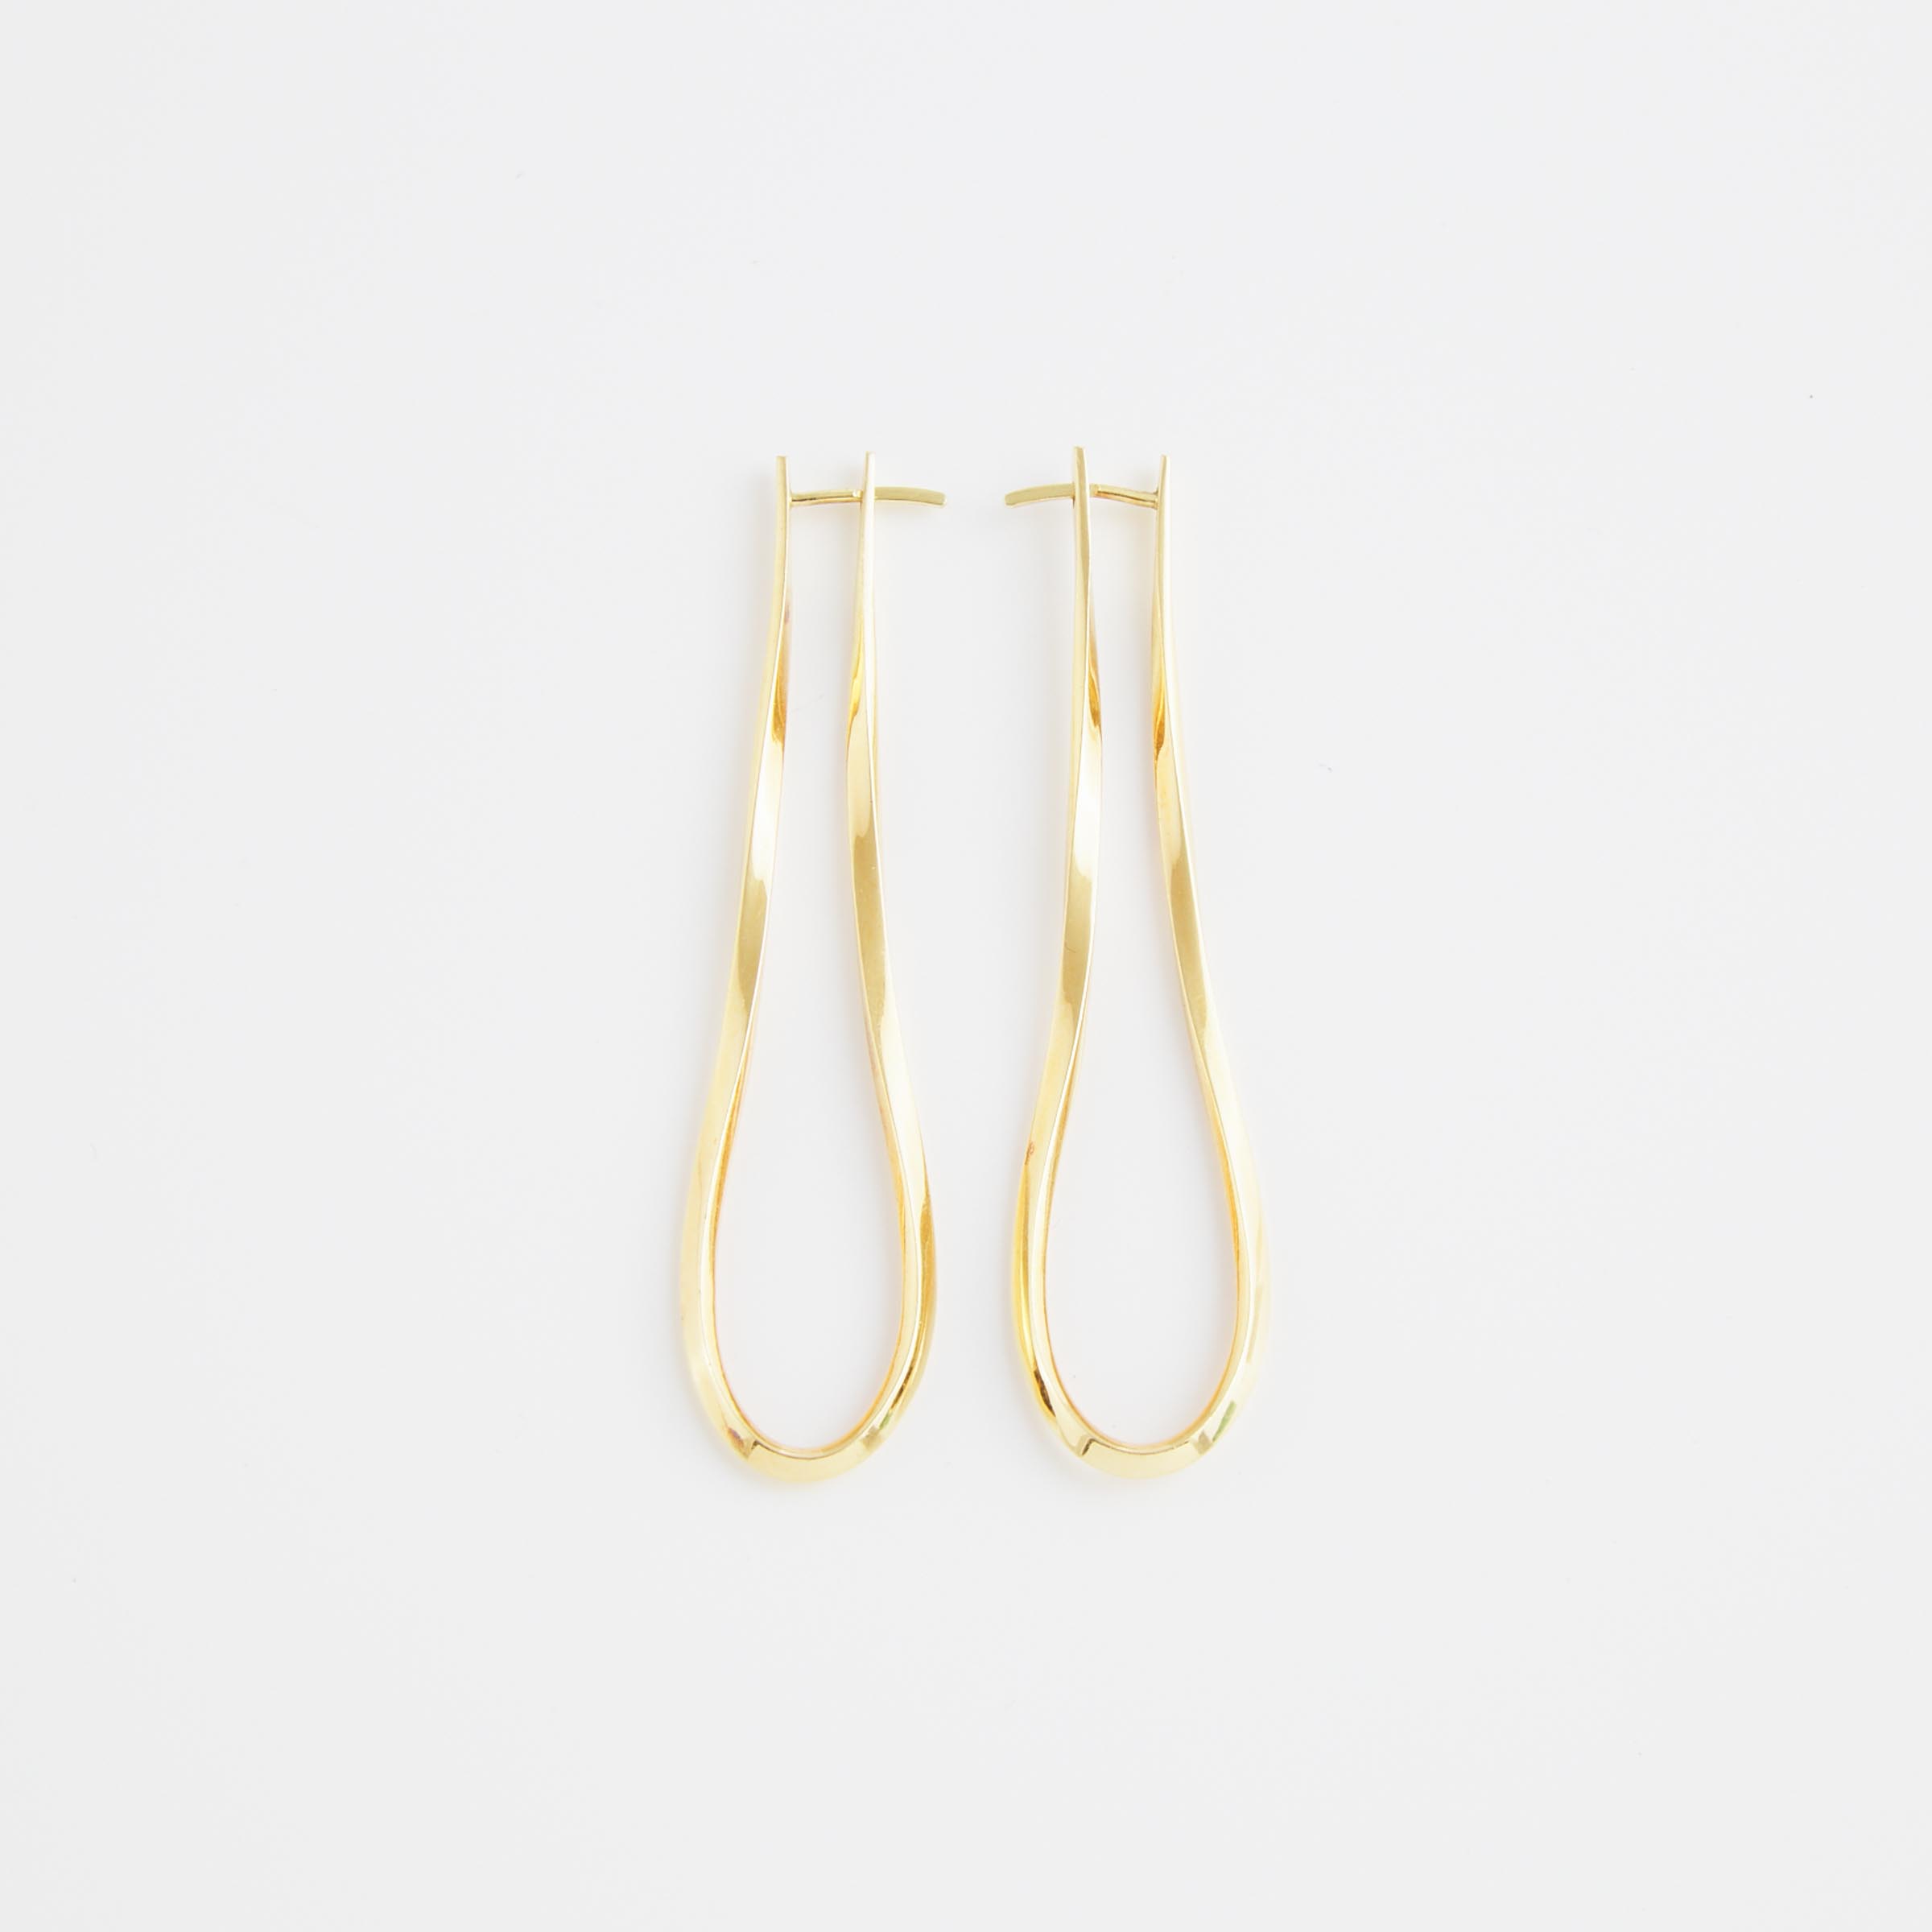 Pair Of Australian 18k Yellow Gold 'Paperclip' Earrings